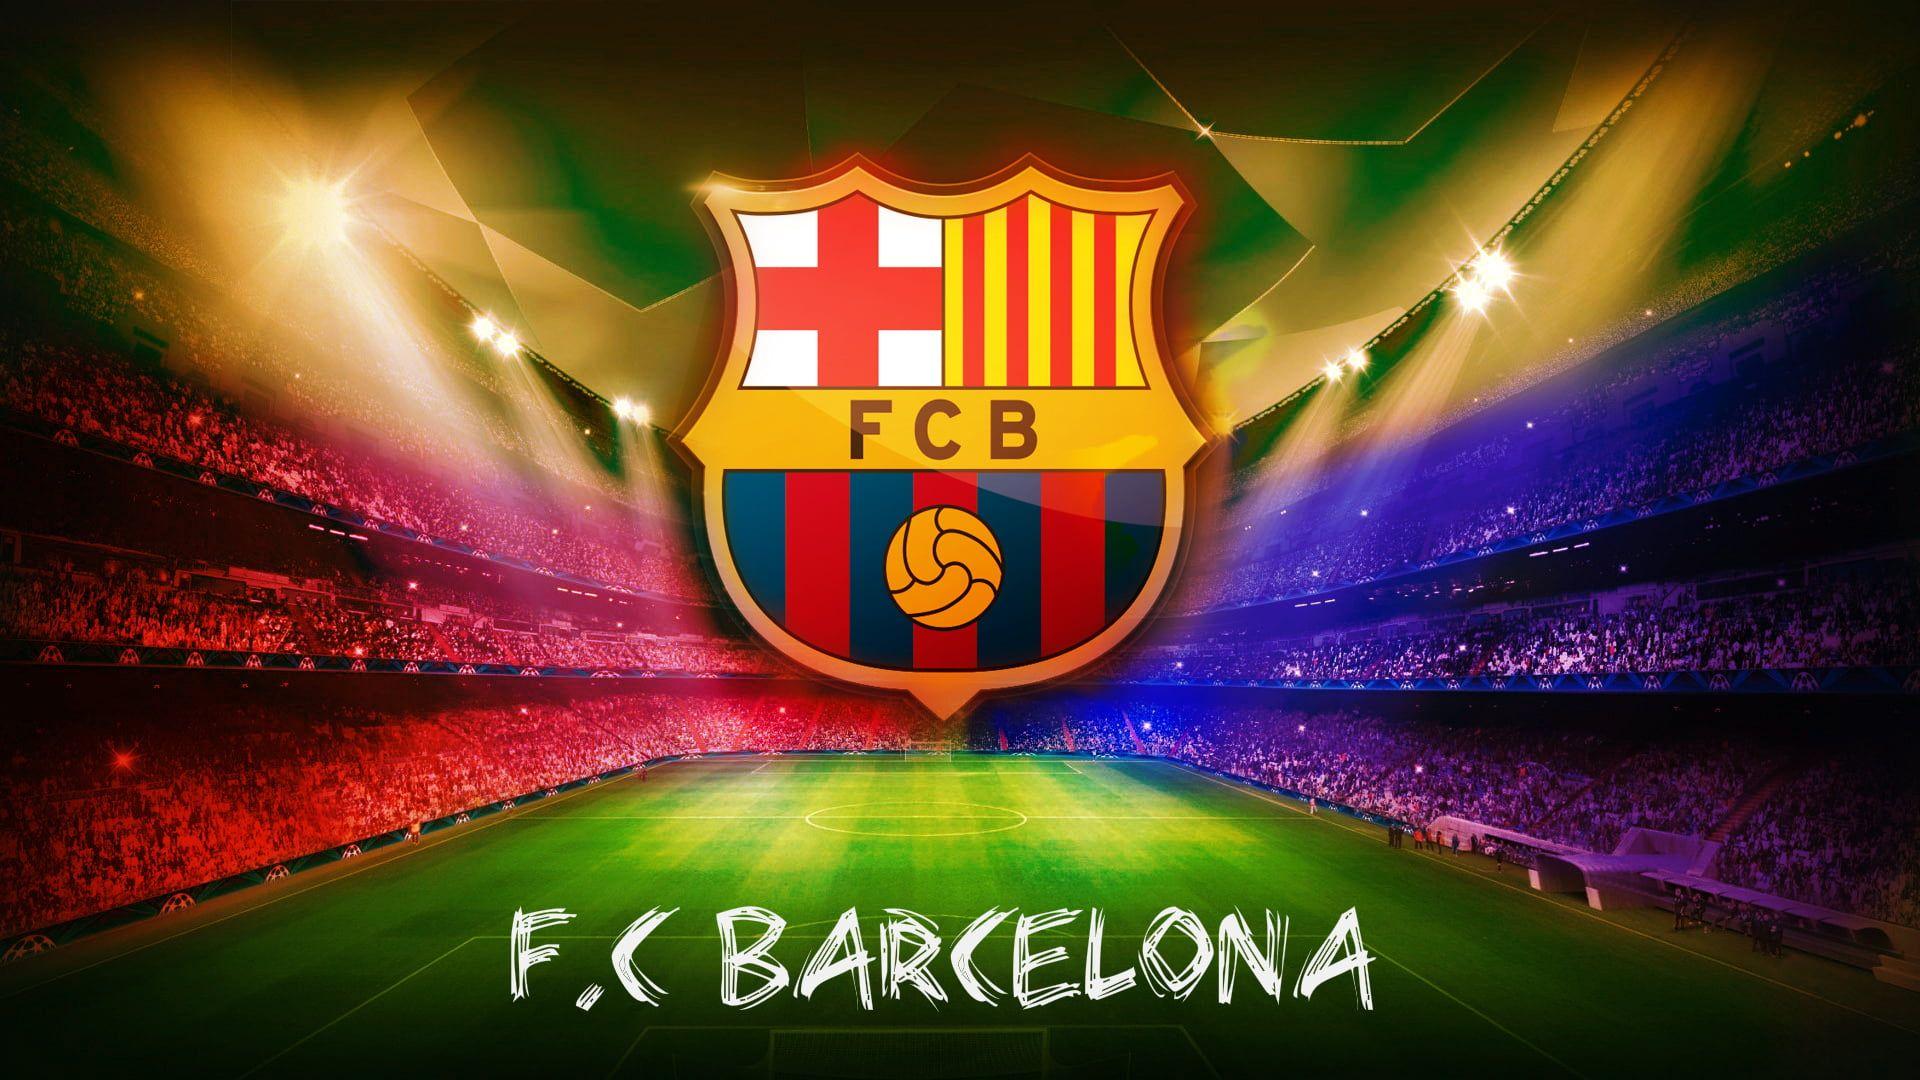 F.C Barcelona logo with stadium background HD wallpaper. Wallpaper